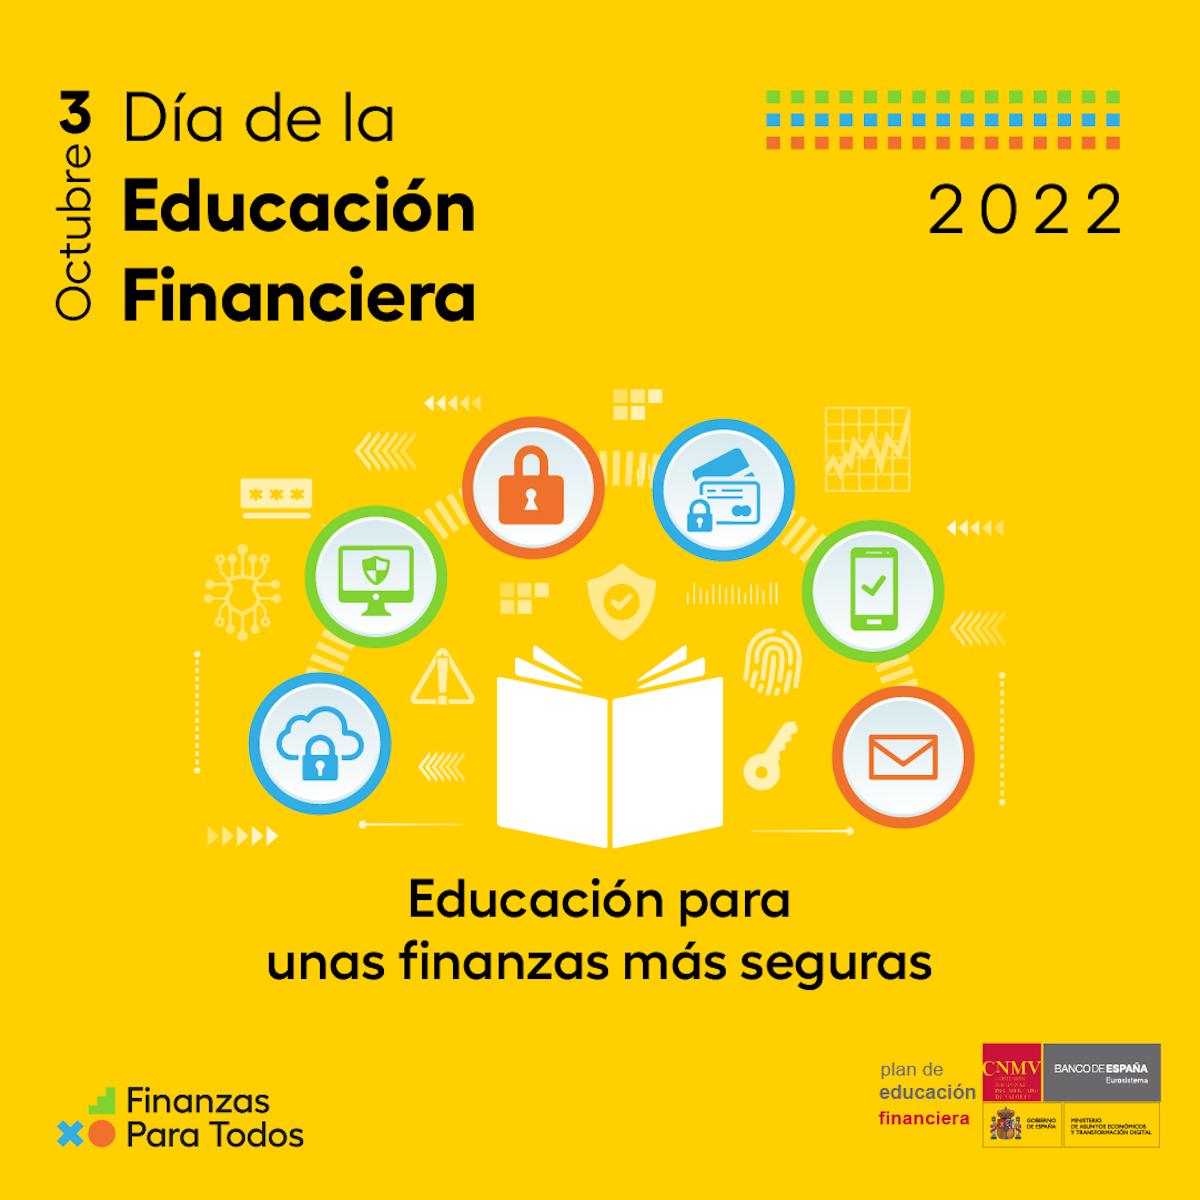 dia-de-la-educacion-financiera-3-octubre-2022-edufinet